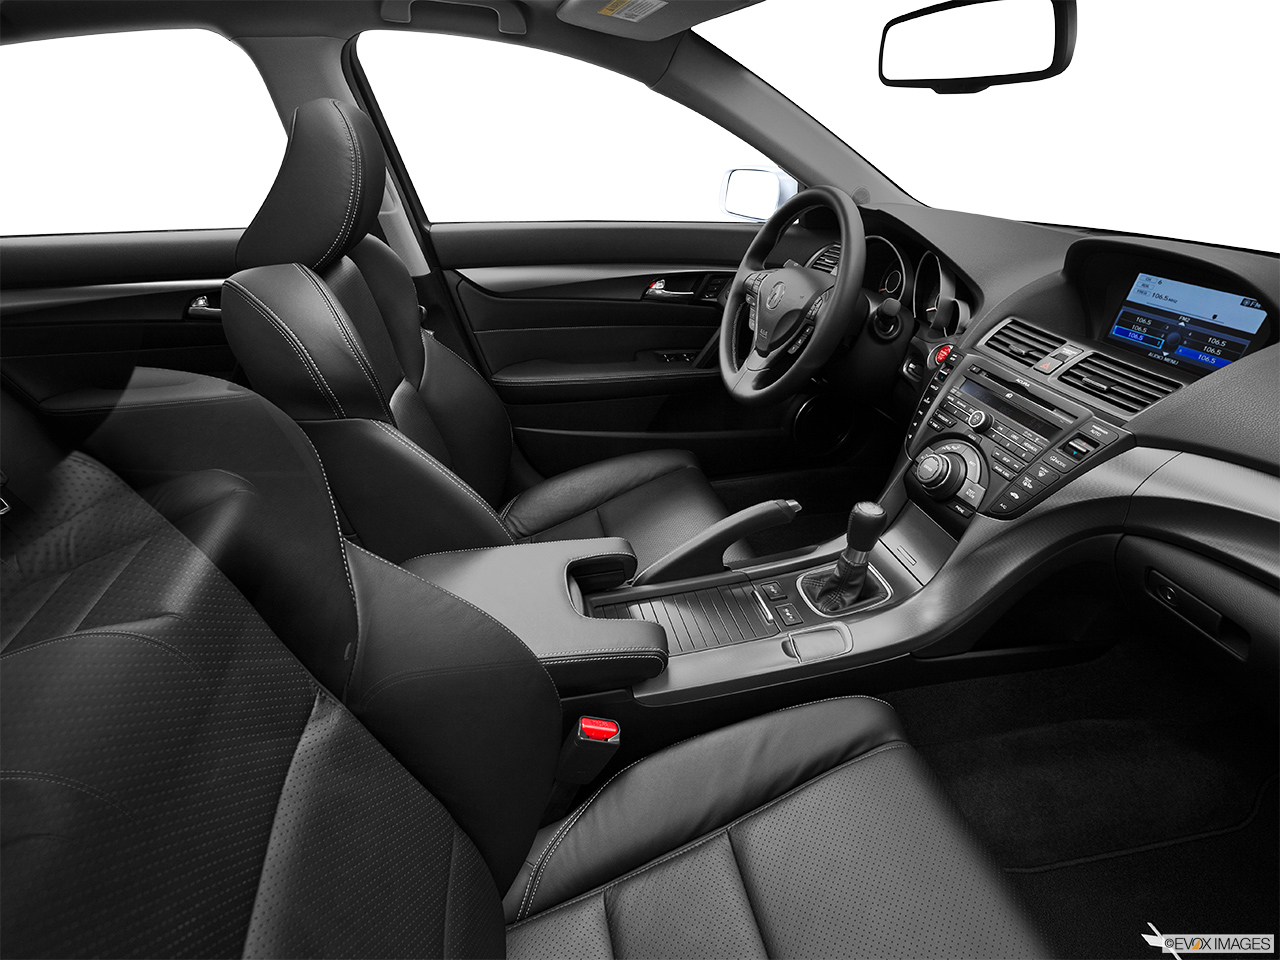 2013 Acura TL SH-AWD Fake Buck Shot - Interior from Passenger B pillar. 